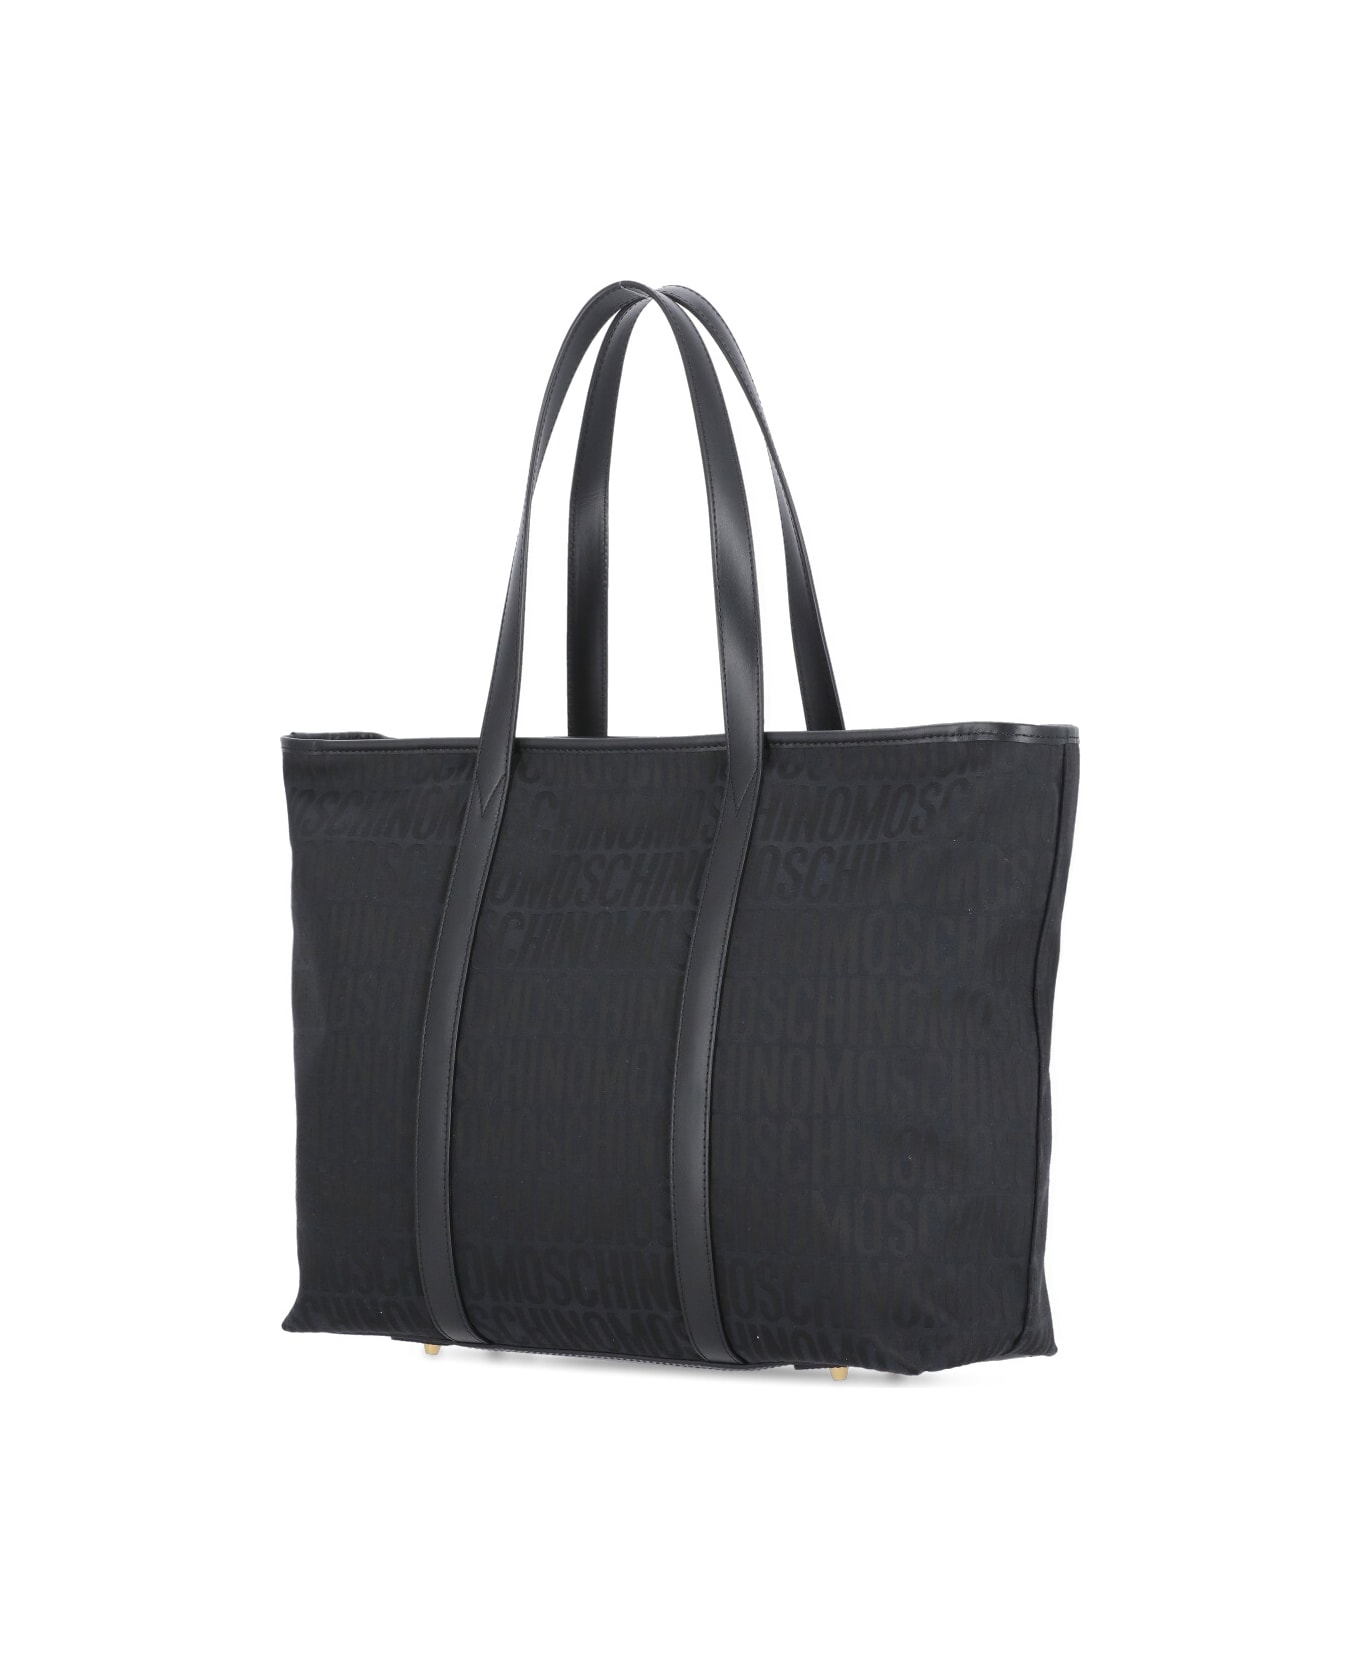 Moschino Shopping Bag With Logo - Fantasia Nero